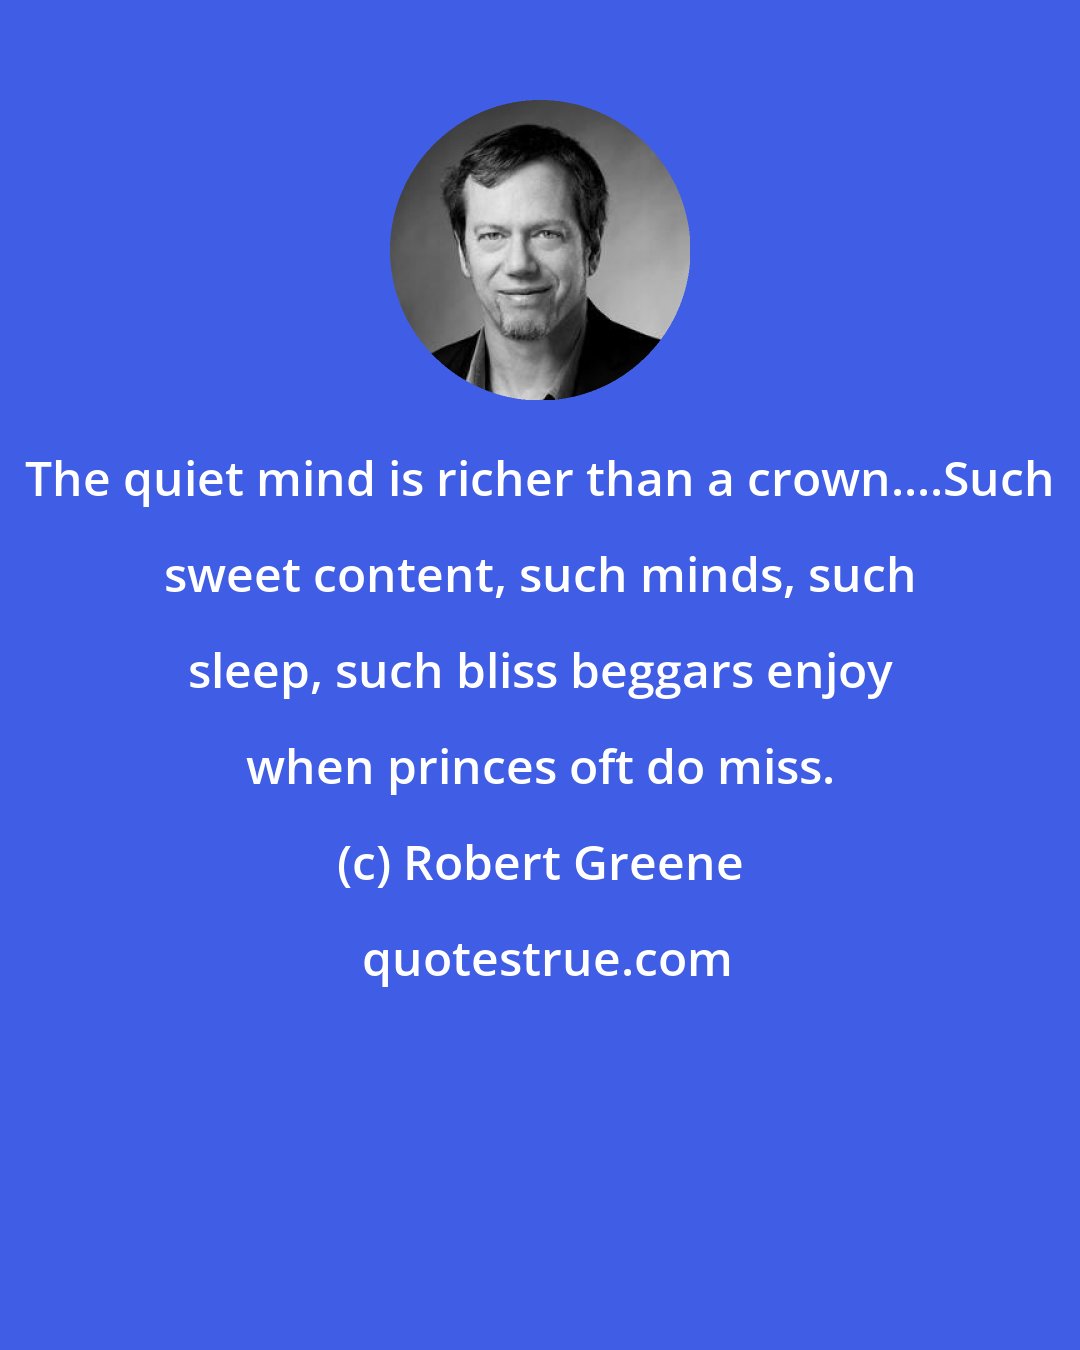 Robert Greene: The quiet mind is richer than a crown....Such sweet content, such minds, such sleep, such bliss beggars enjoy when princes oft do miss.